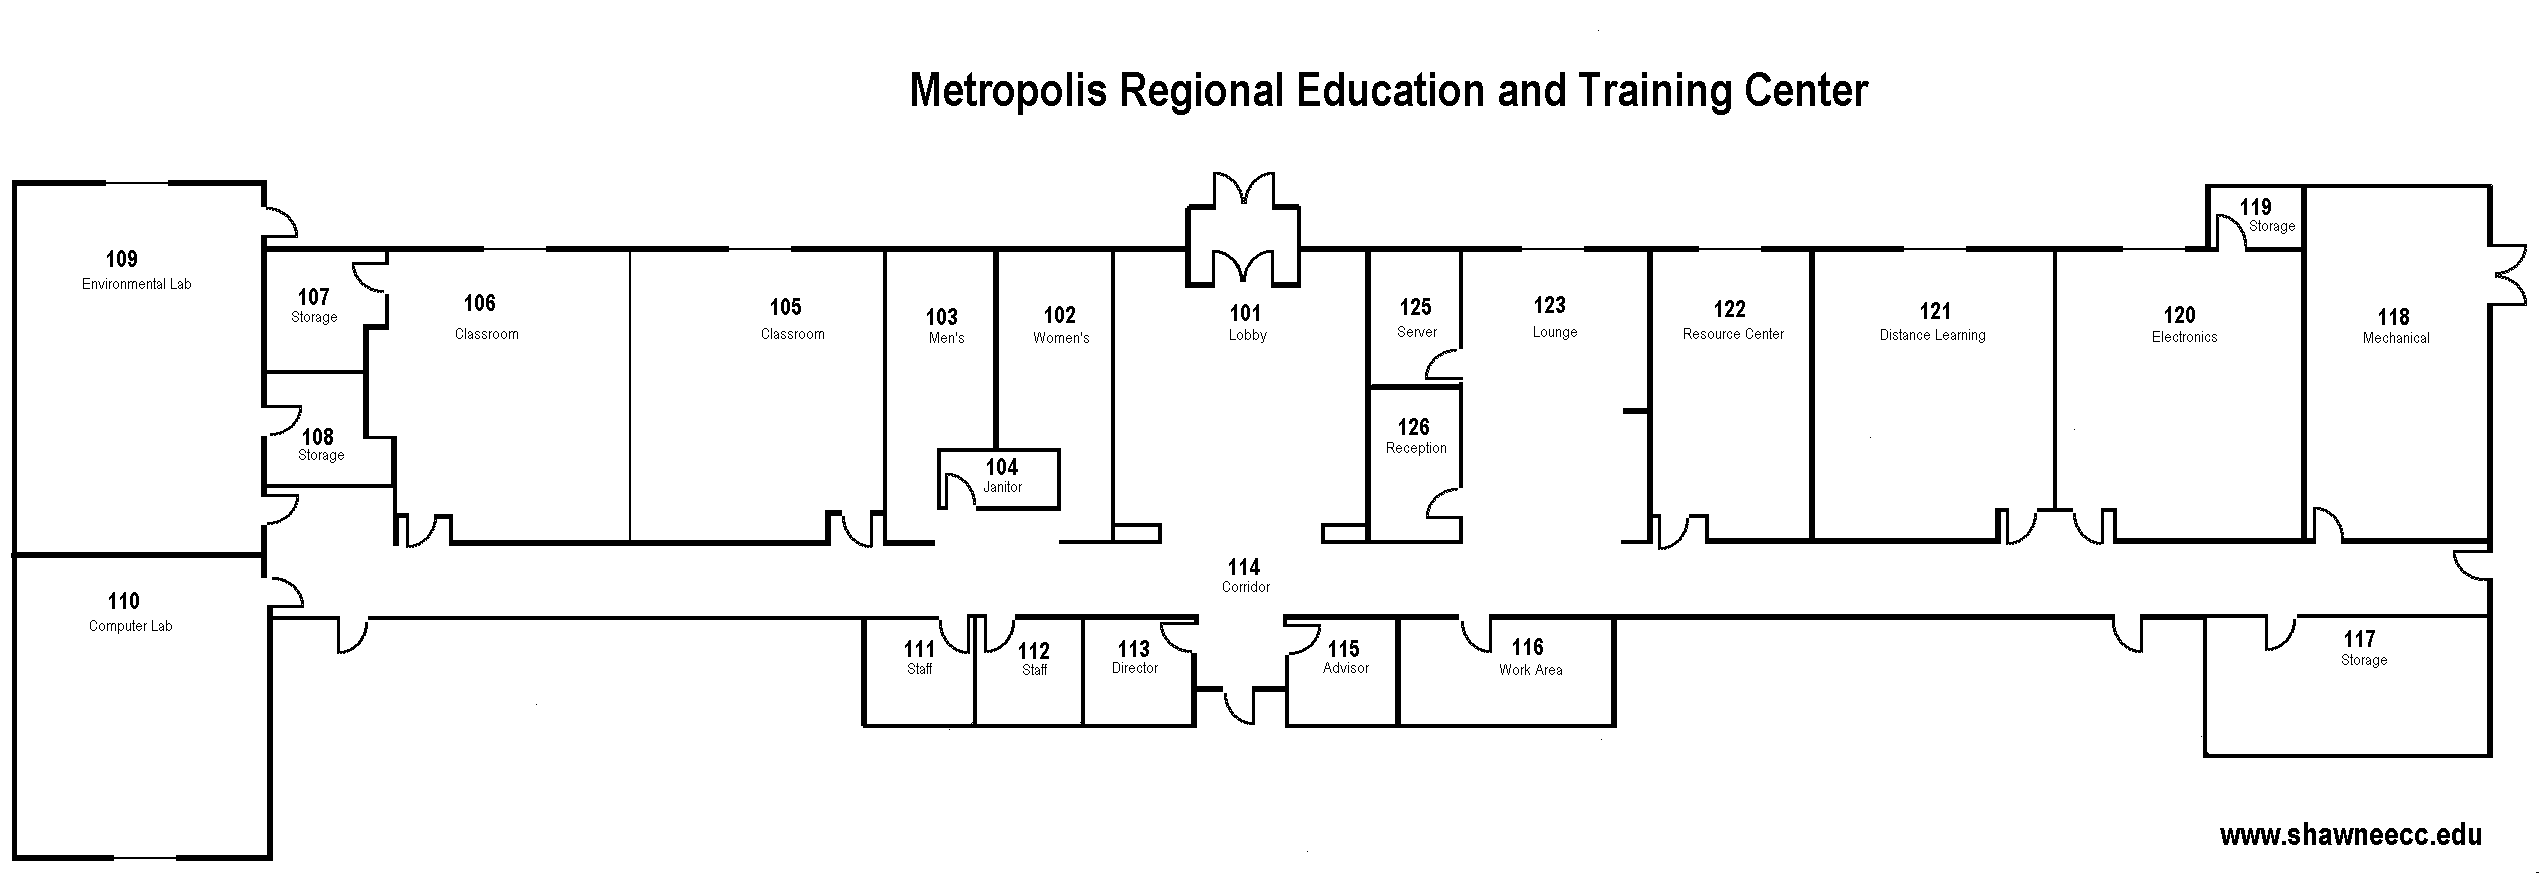 Metro Center Map